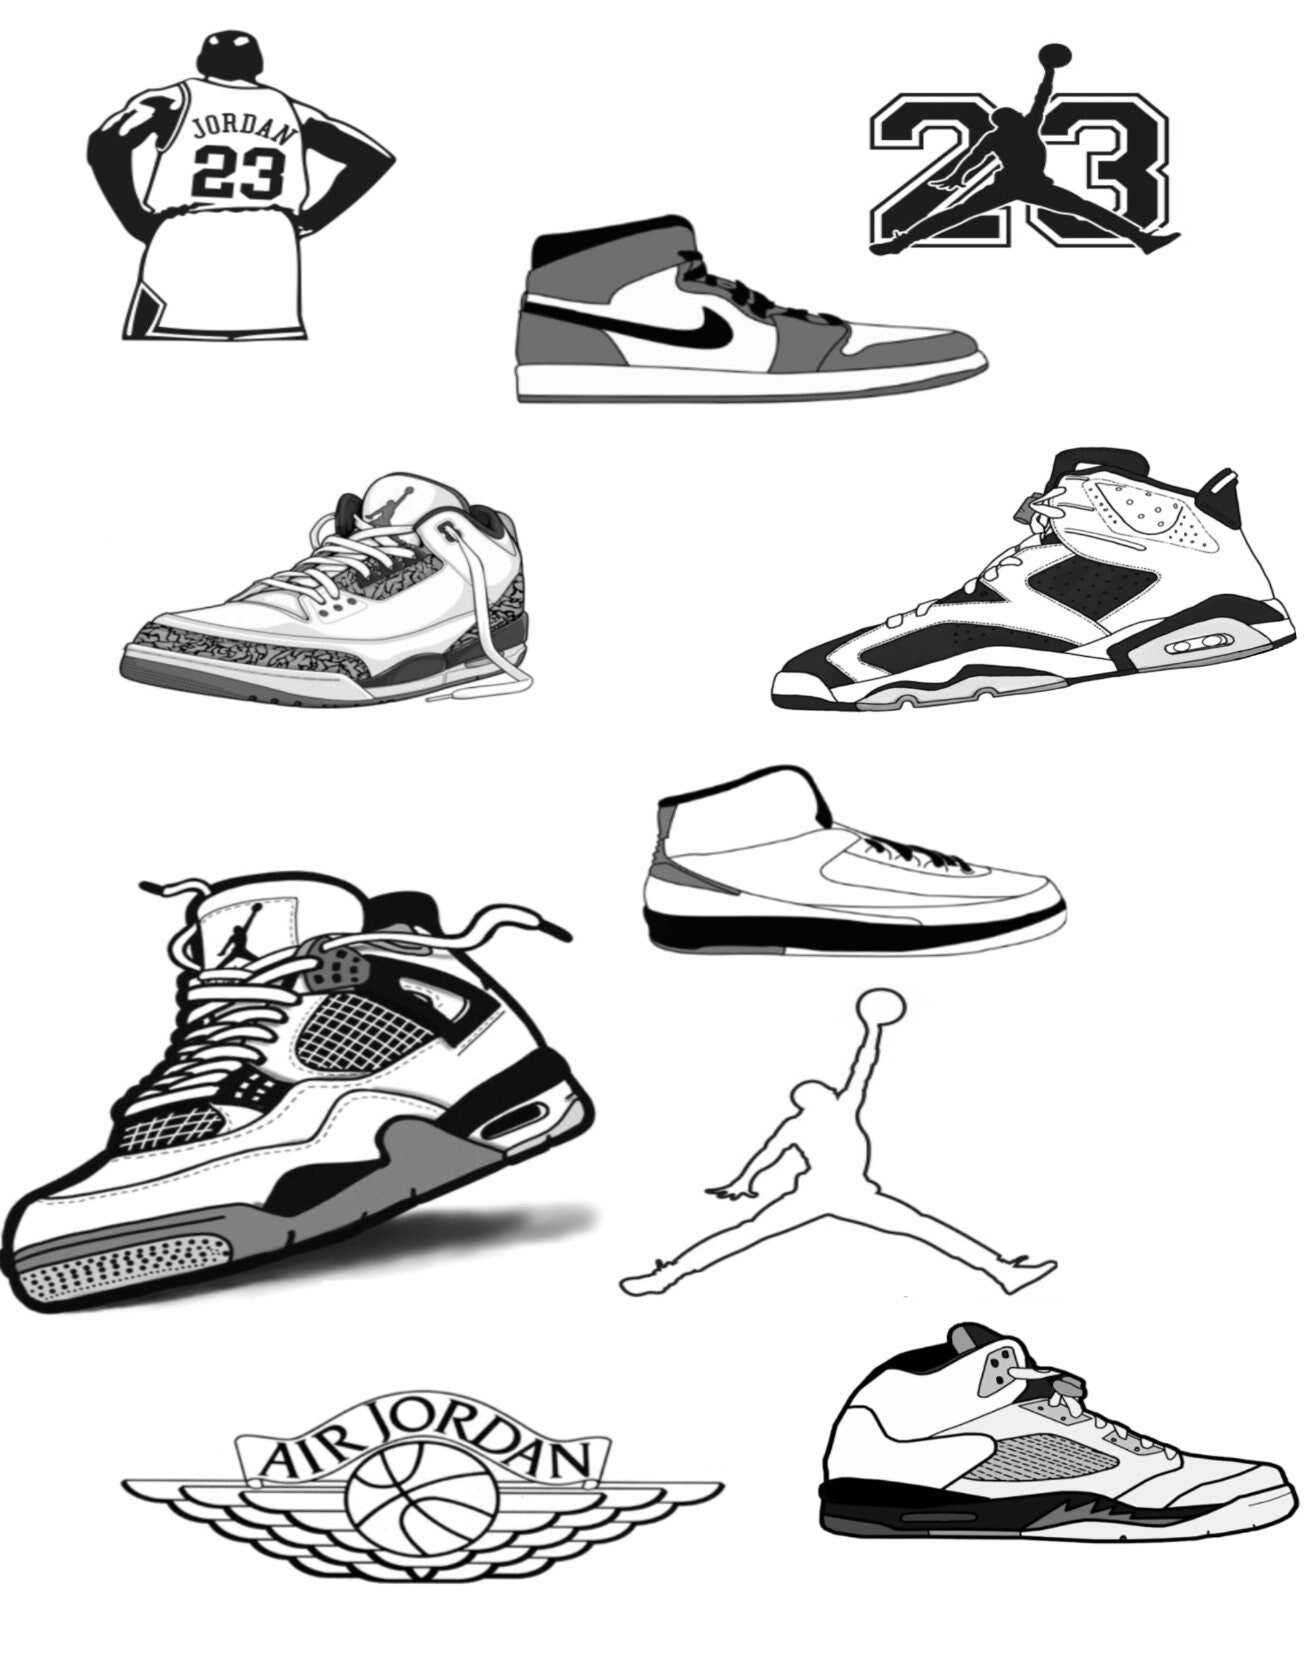 Footwear Sketches on Pinterest